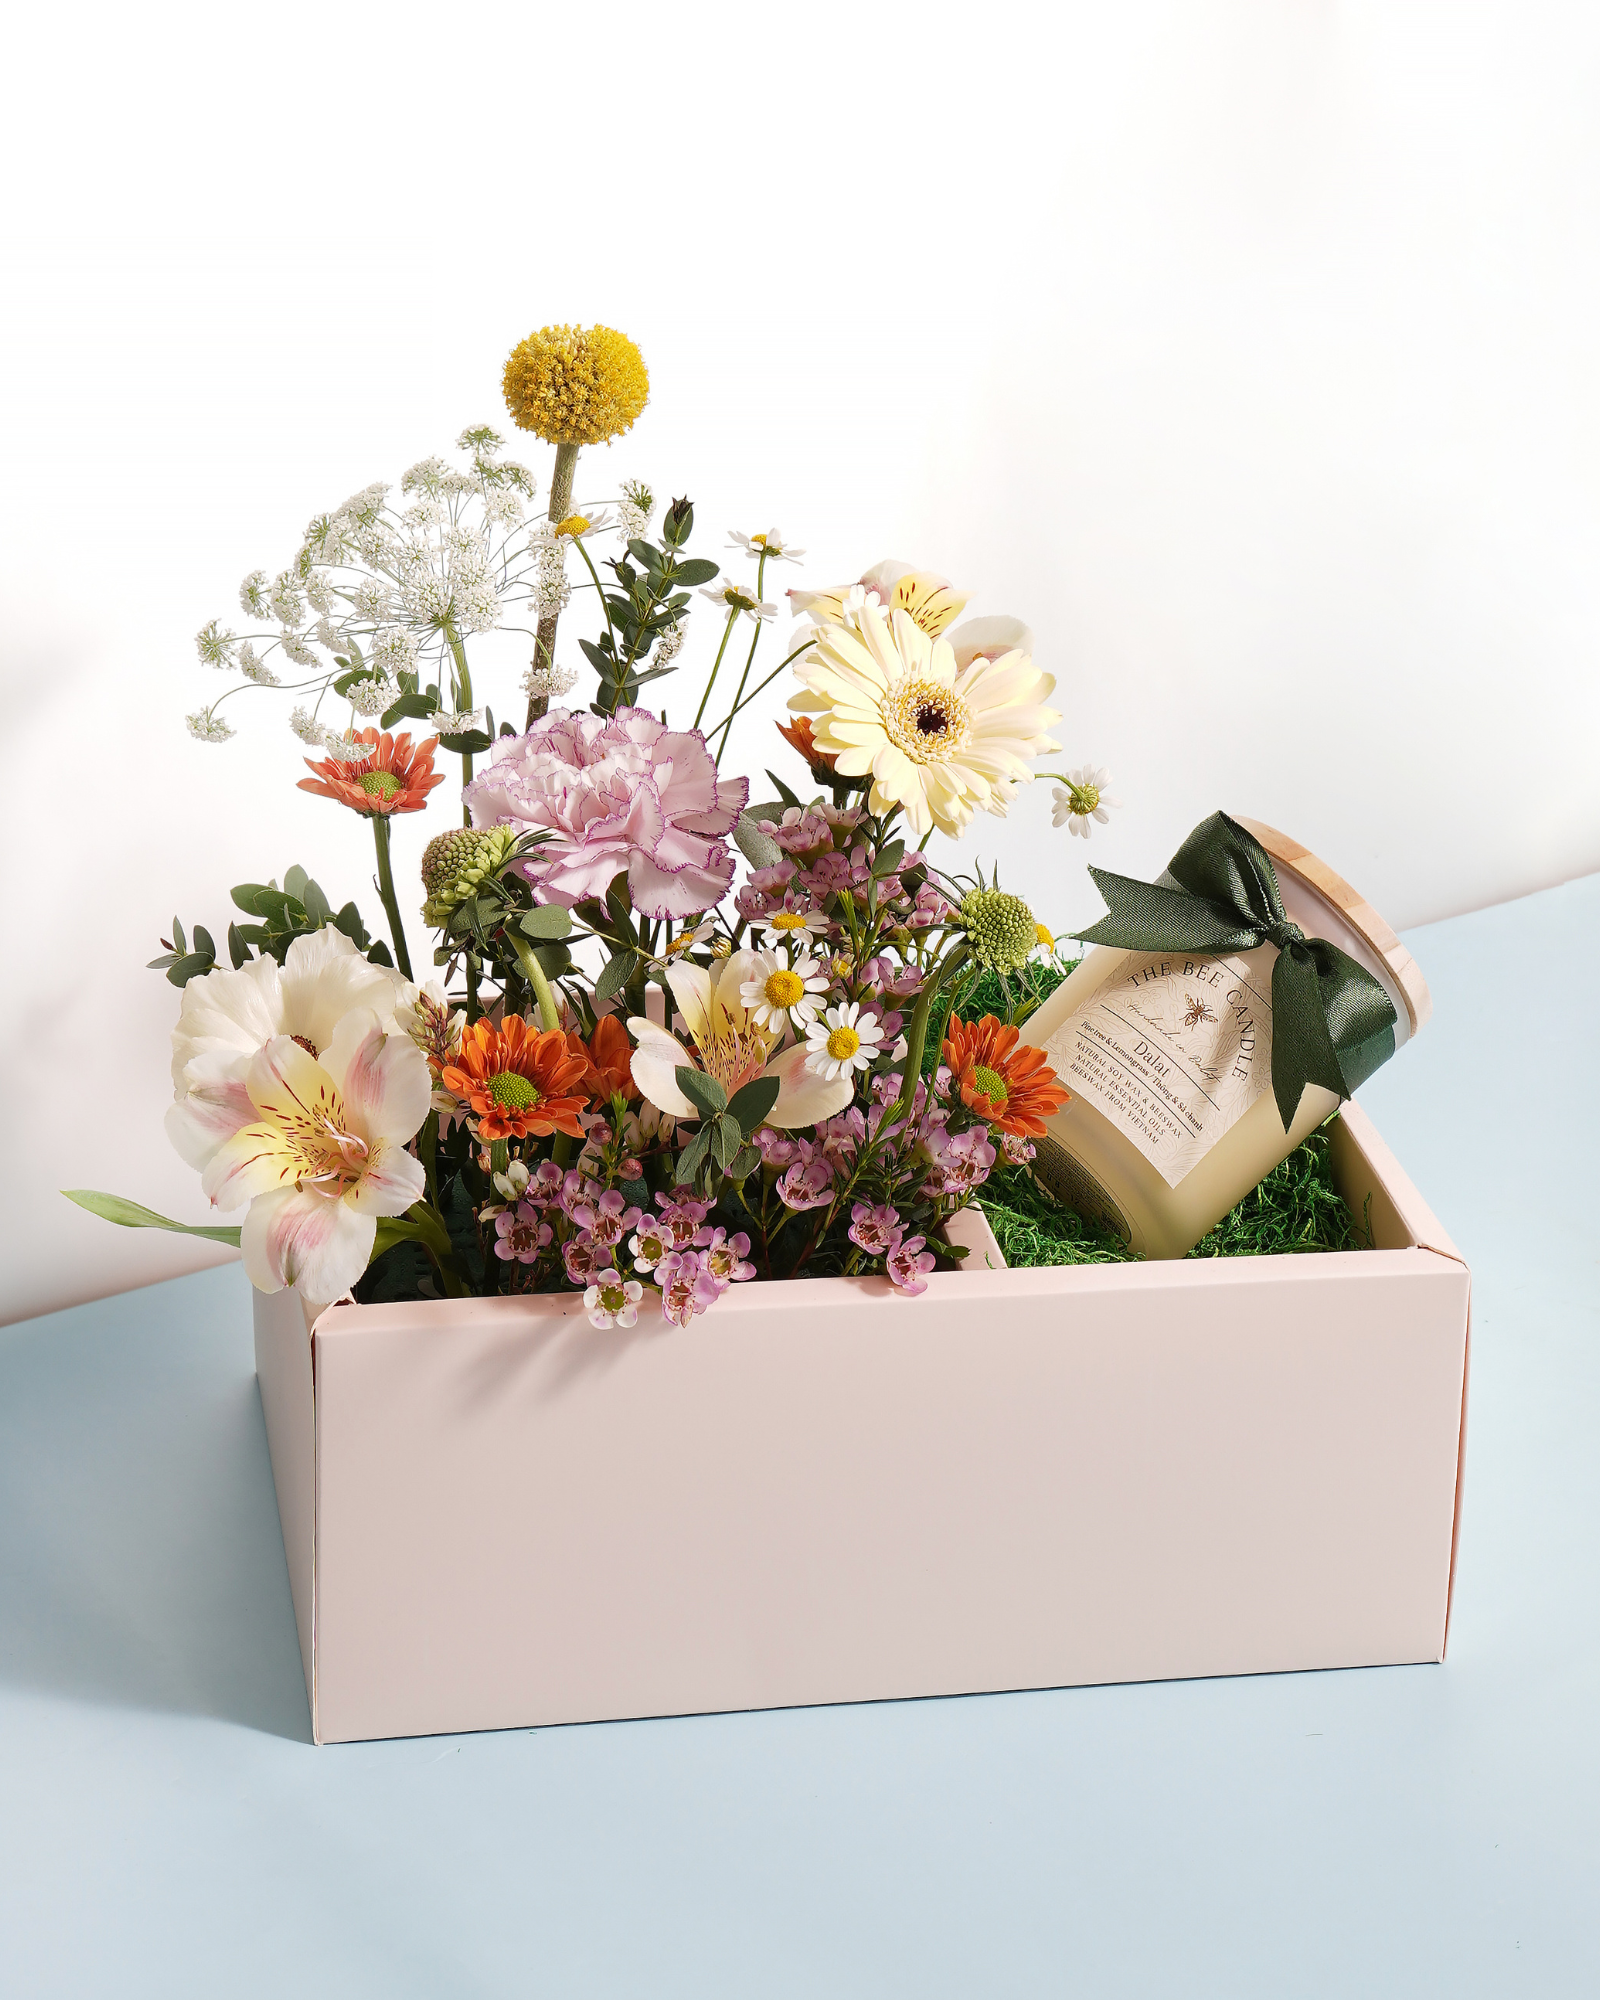  Flower Bouquet with Candle 6 | Set Hoa Tươi kèm Nến thơm | Quà tặng 8/3 